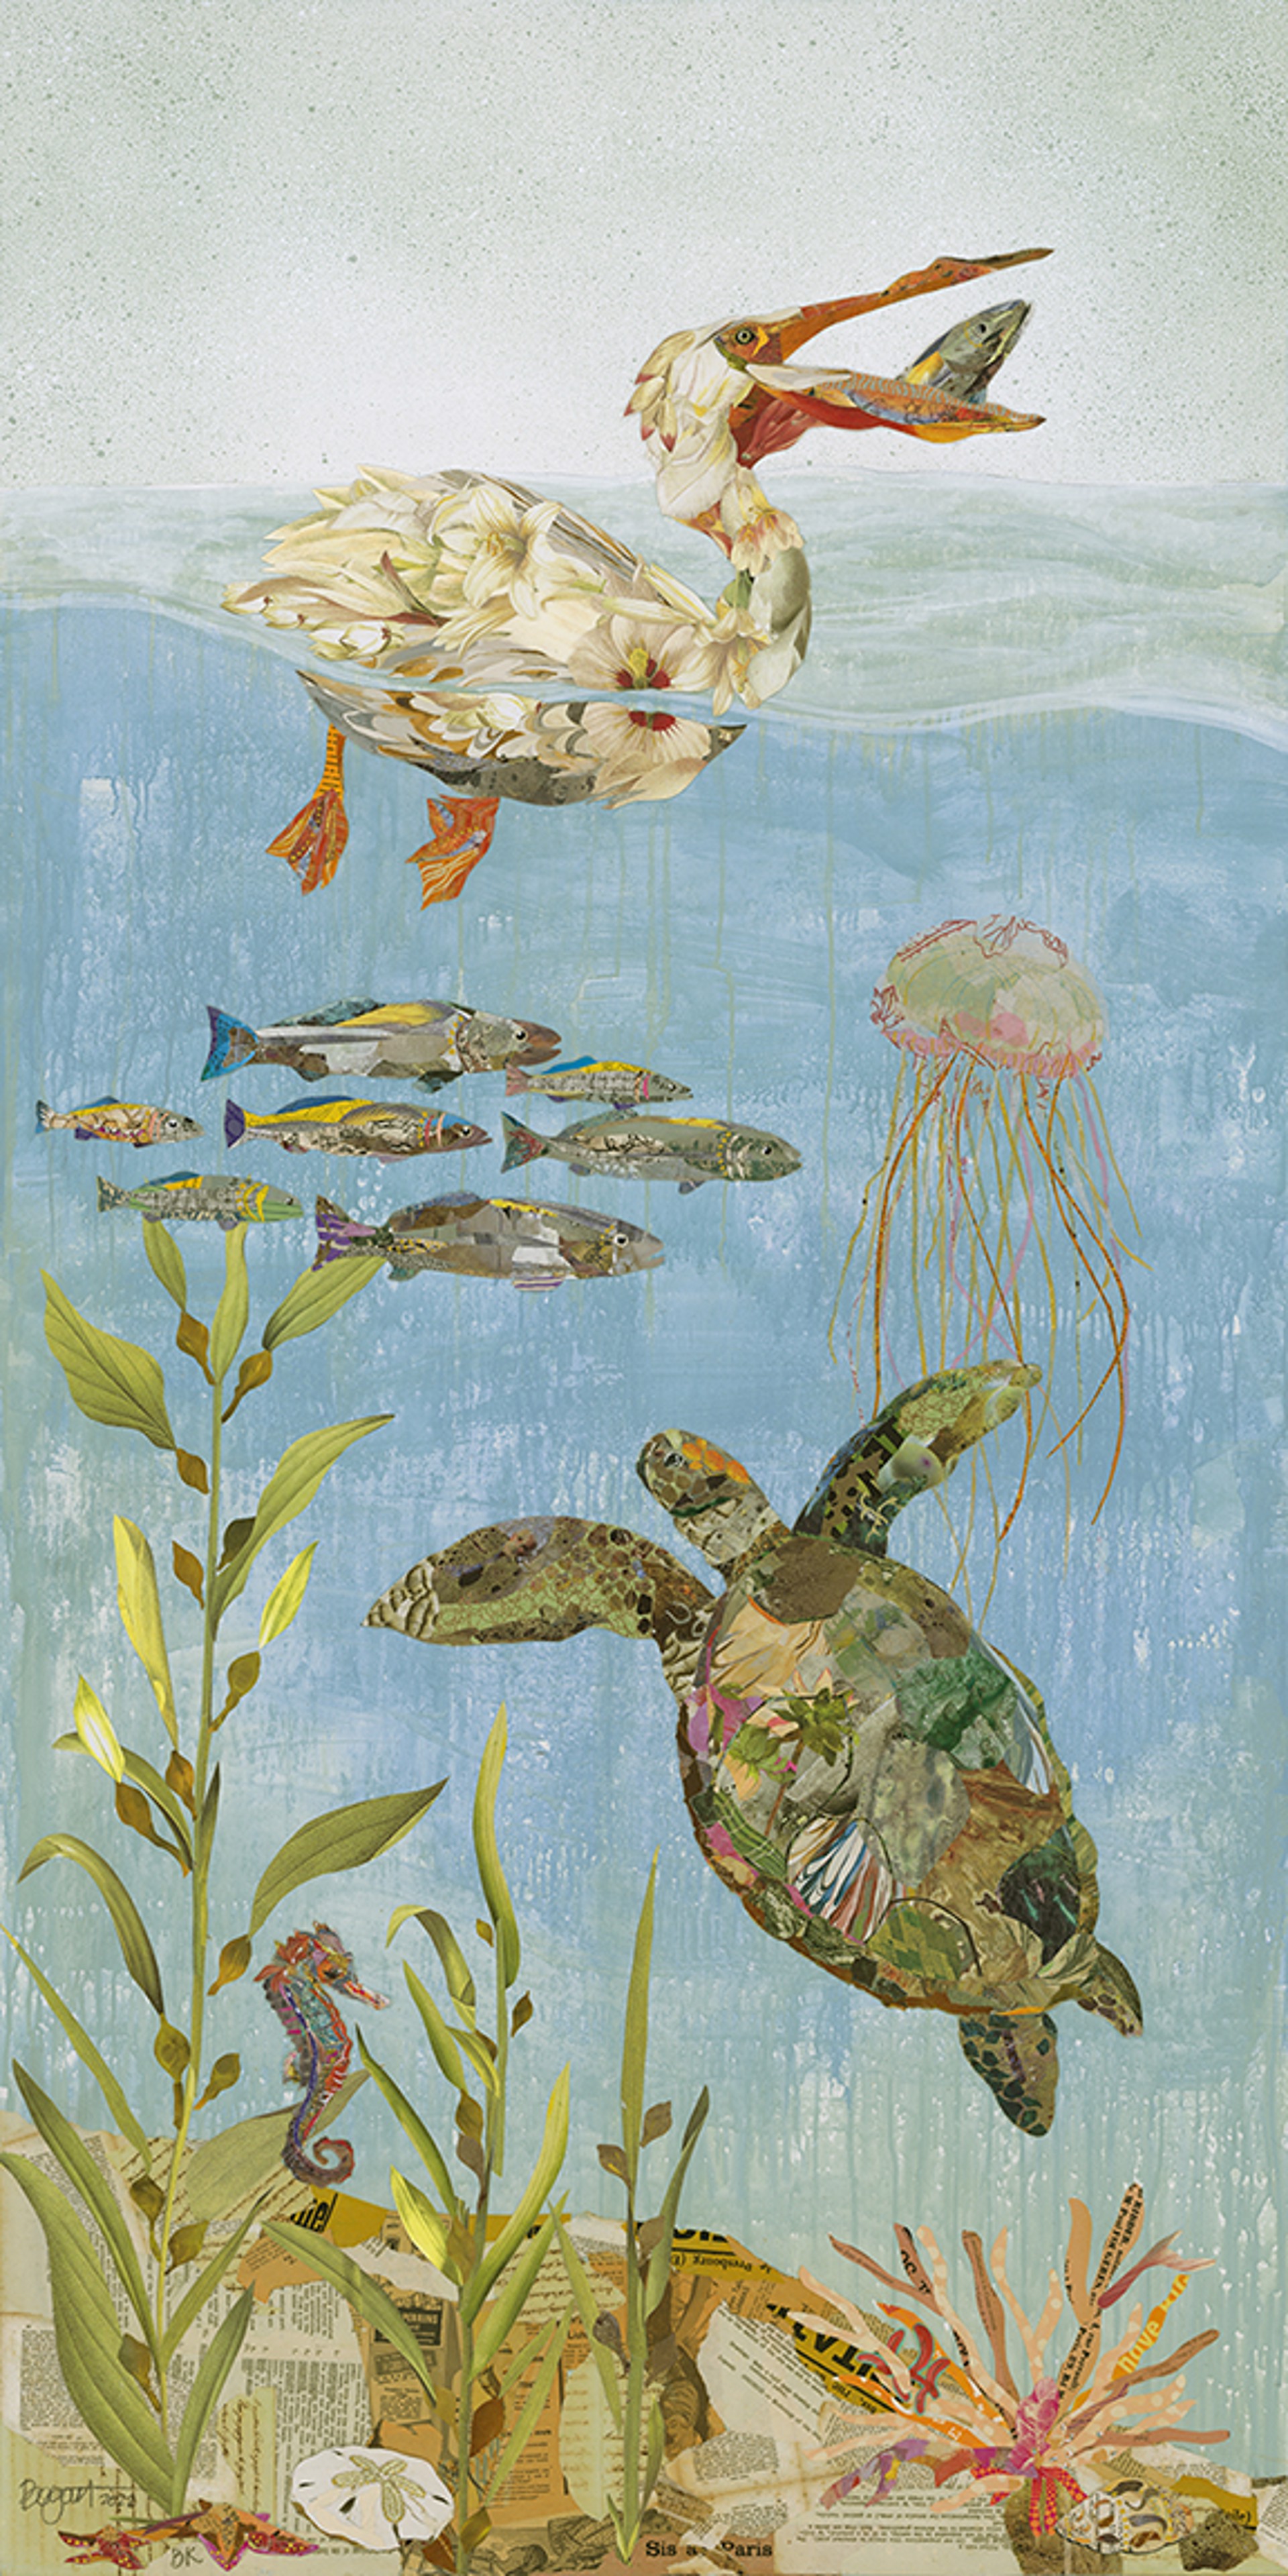 Sea of Life by Brenda Bogart - Prints